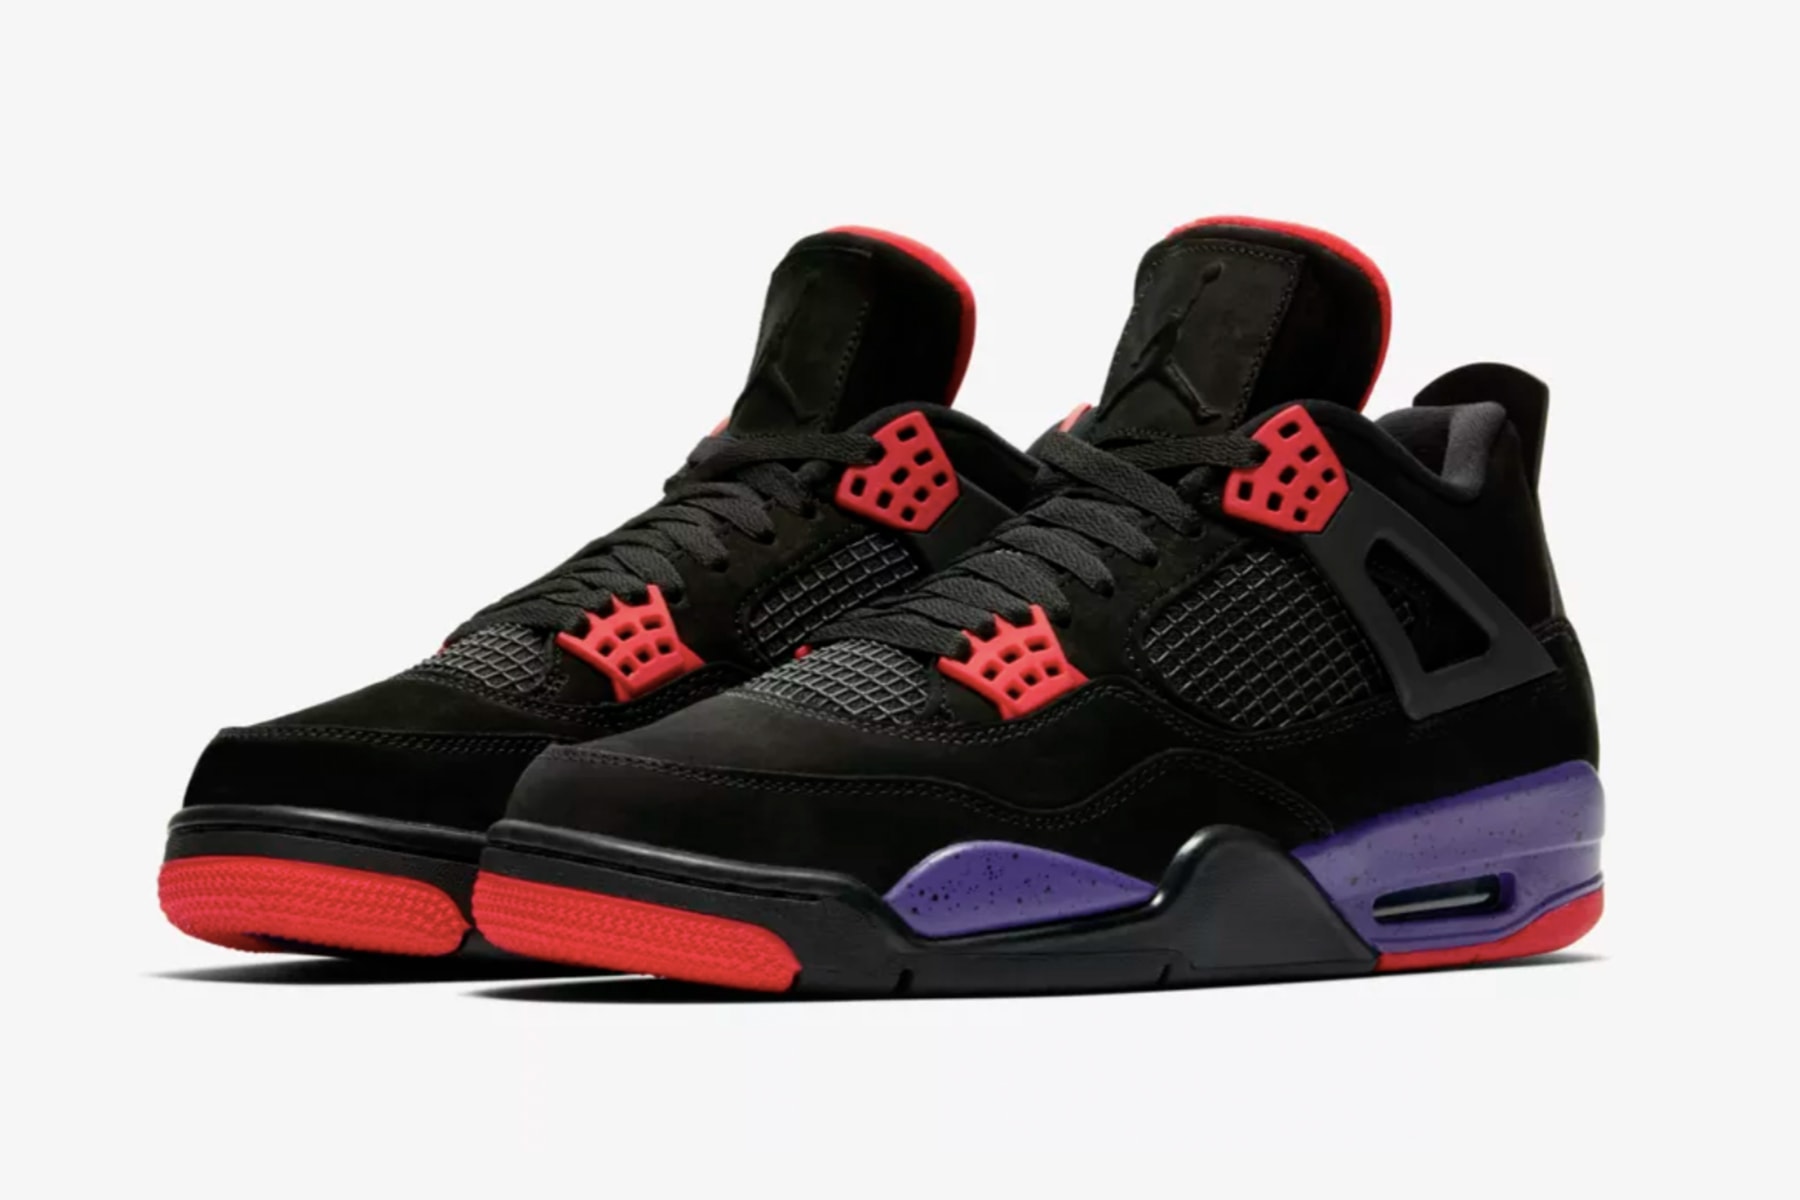 Air Jordan 4 “Black/Court Purple” 日本リリース情報が遂に解禁 ナイキ Nike エアジョーダン 4 パープル HYPEBEAST ハイプビースト